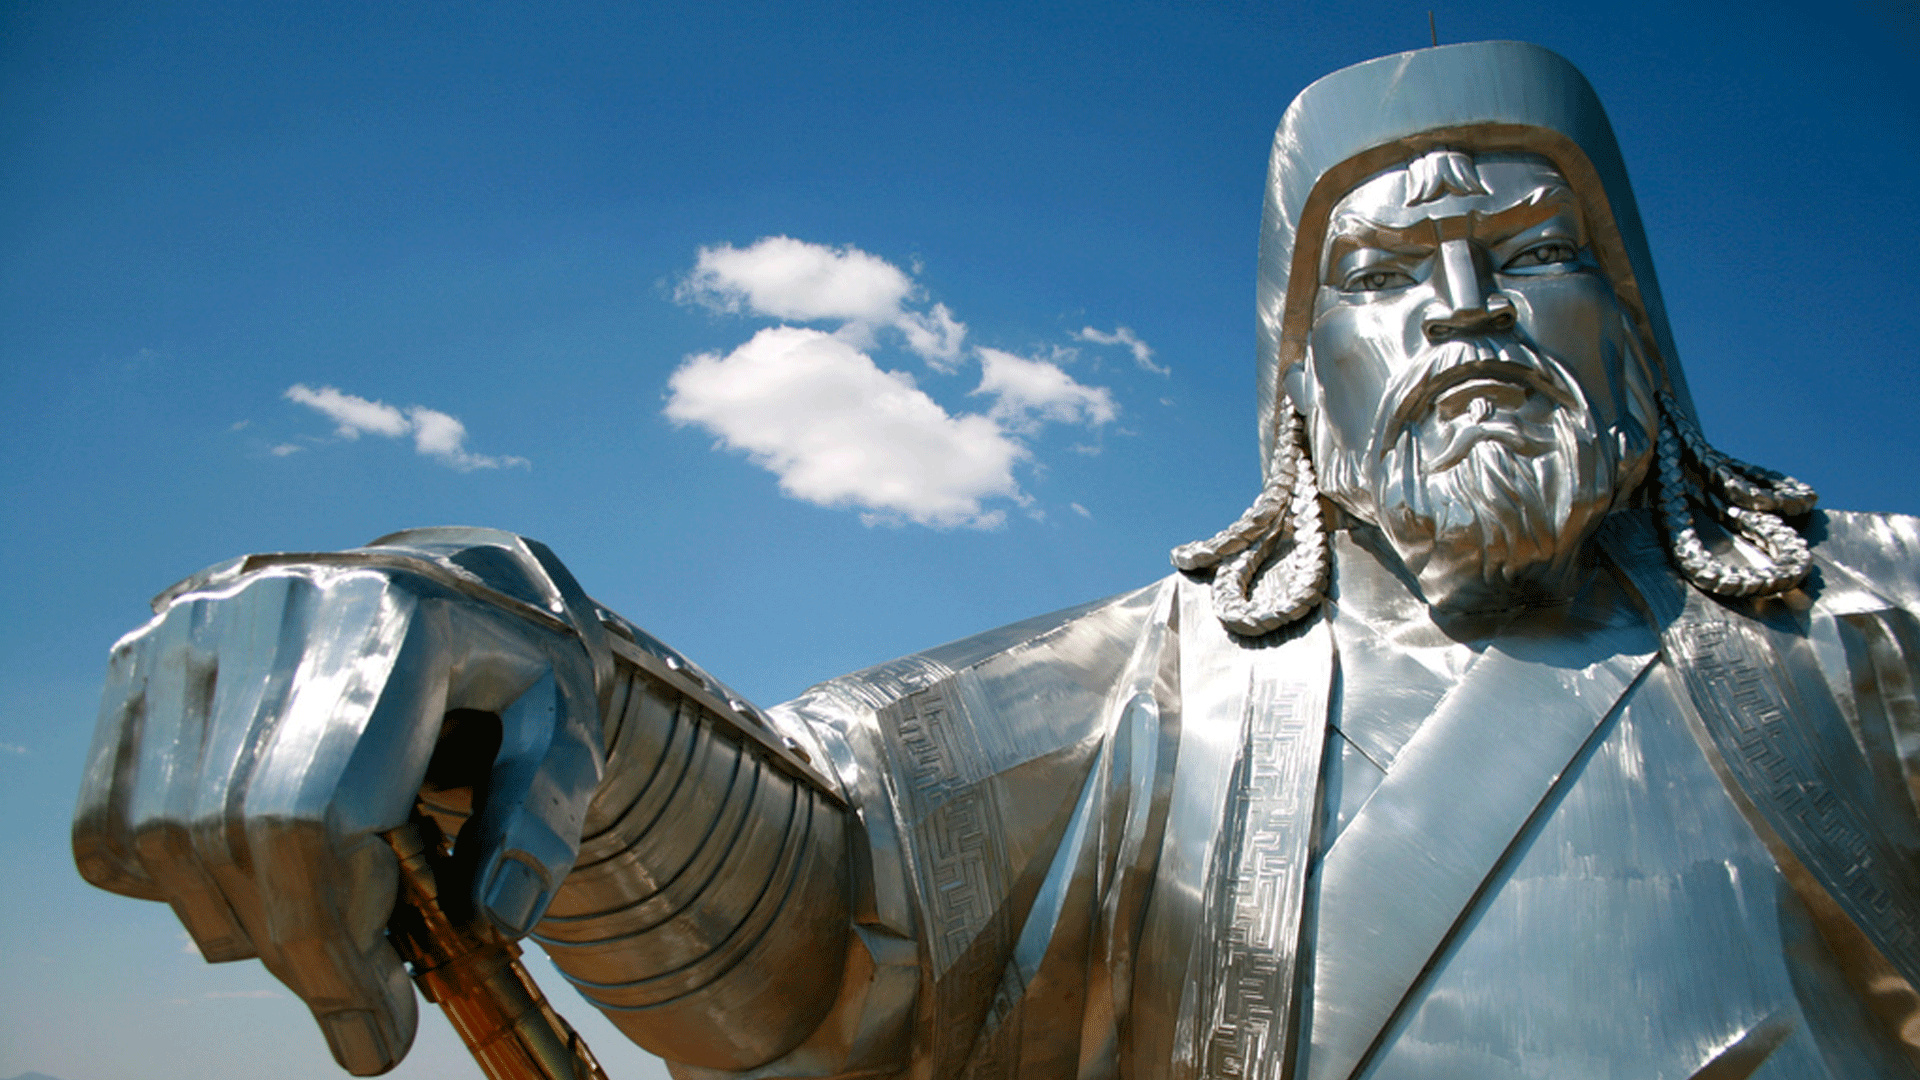 HD wallpaper, Genghis Khan, Desktop Full Hd Genghis Khan Background, Historical Figure, Educational Resource, 1920X1080 Full Hd Desktop, Skillsphere Education